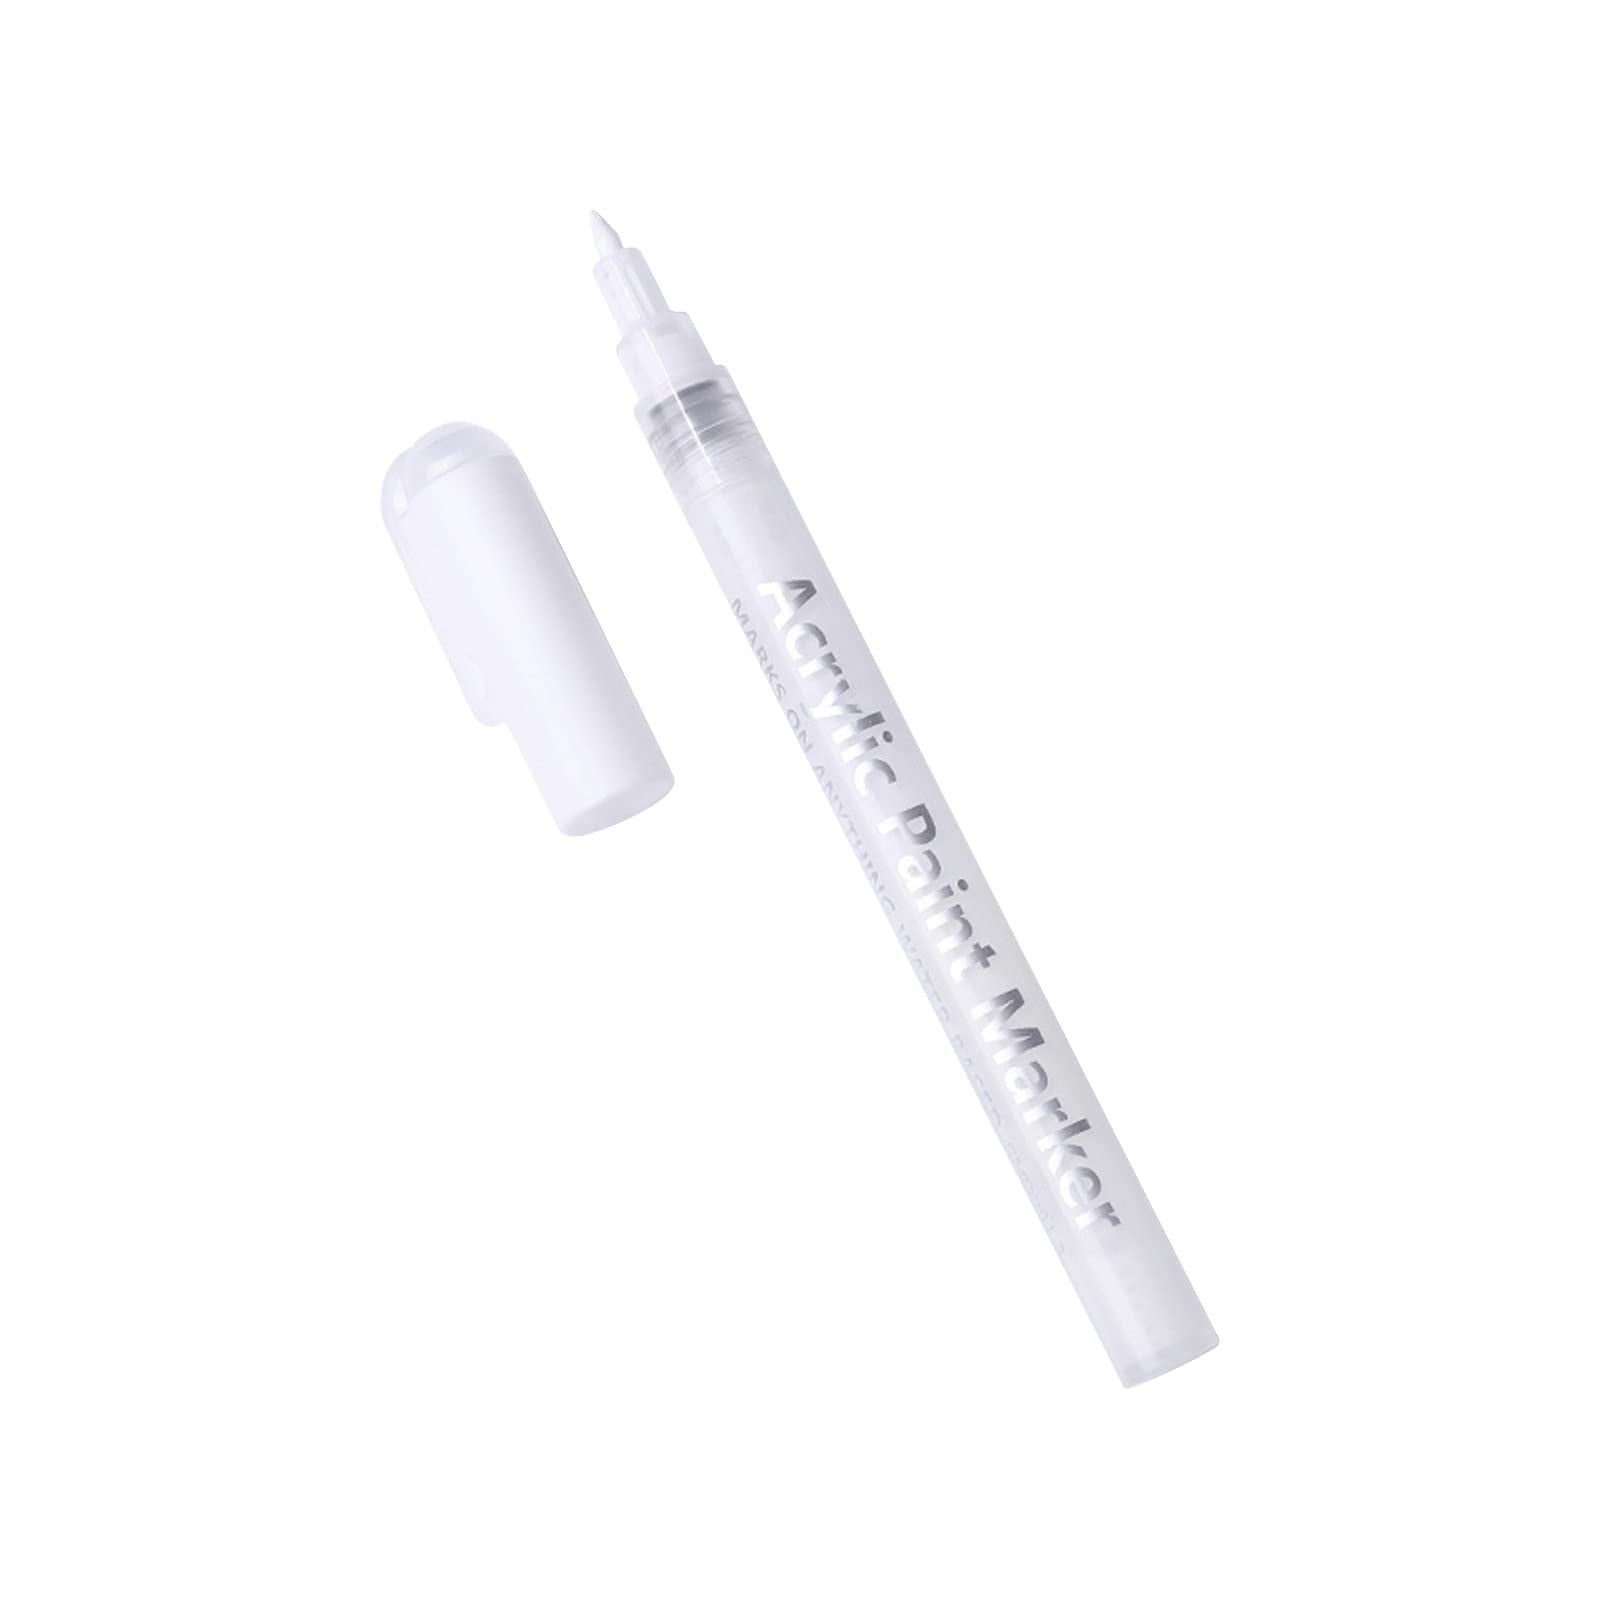 white nail pencil for under nails｜TikTok Search